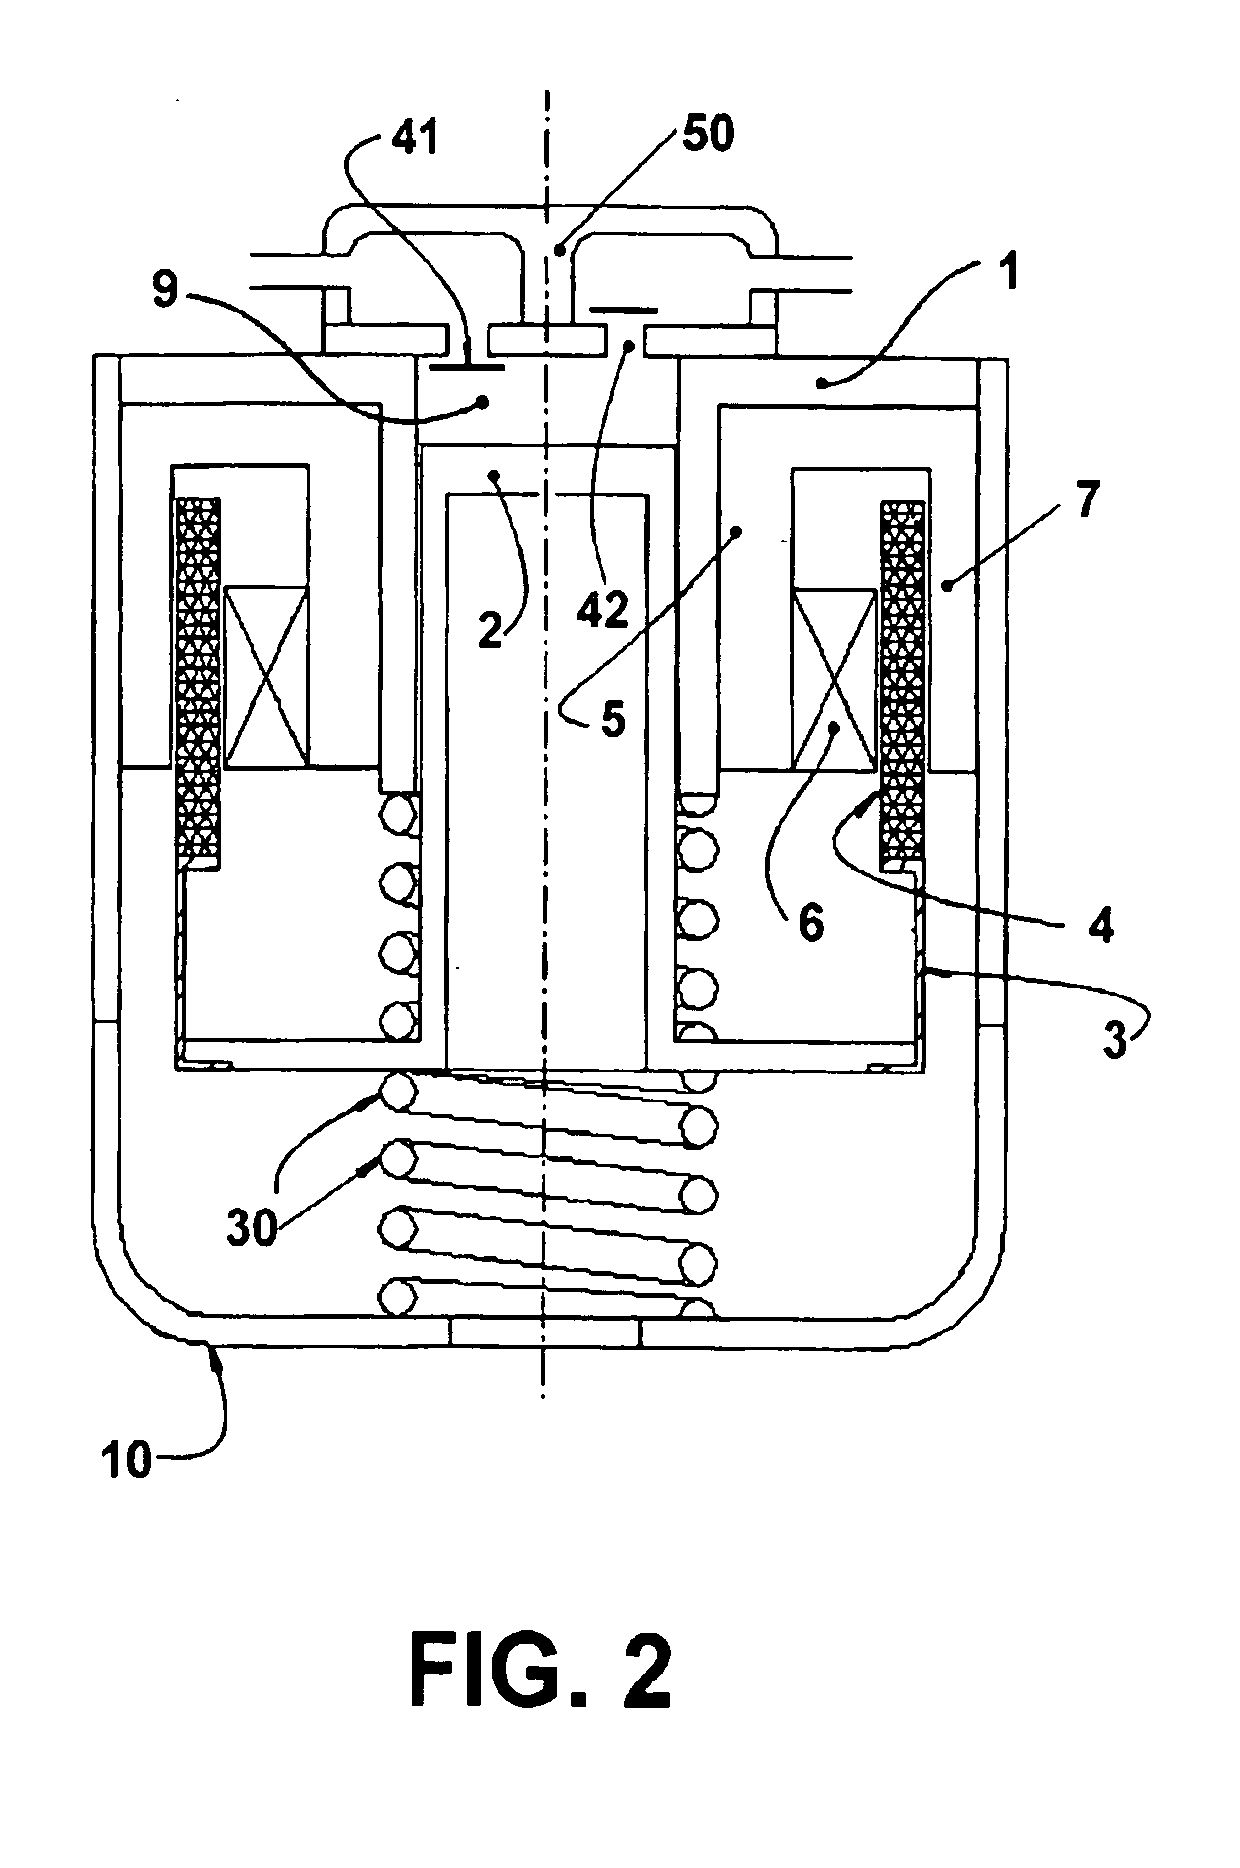 Resonant arrangement for a linear compressor